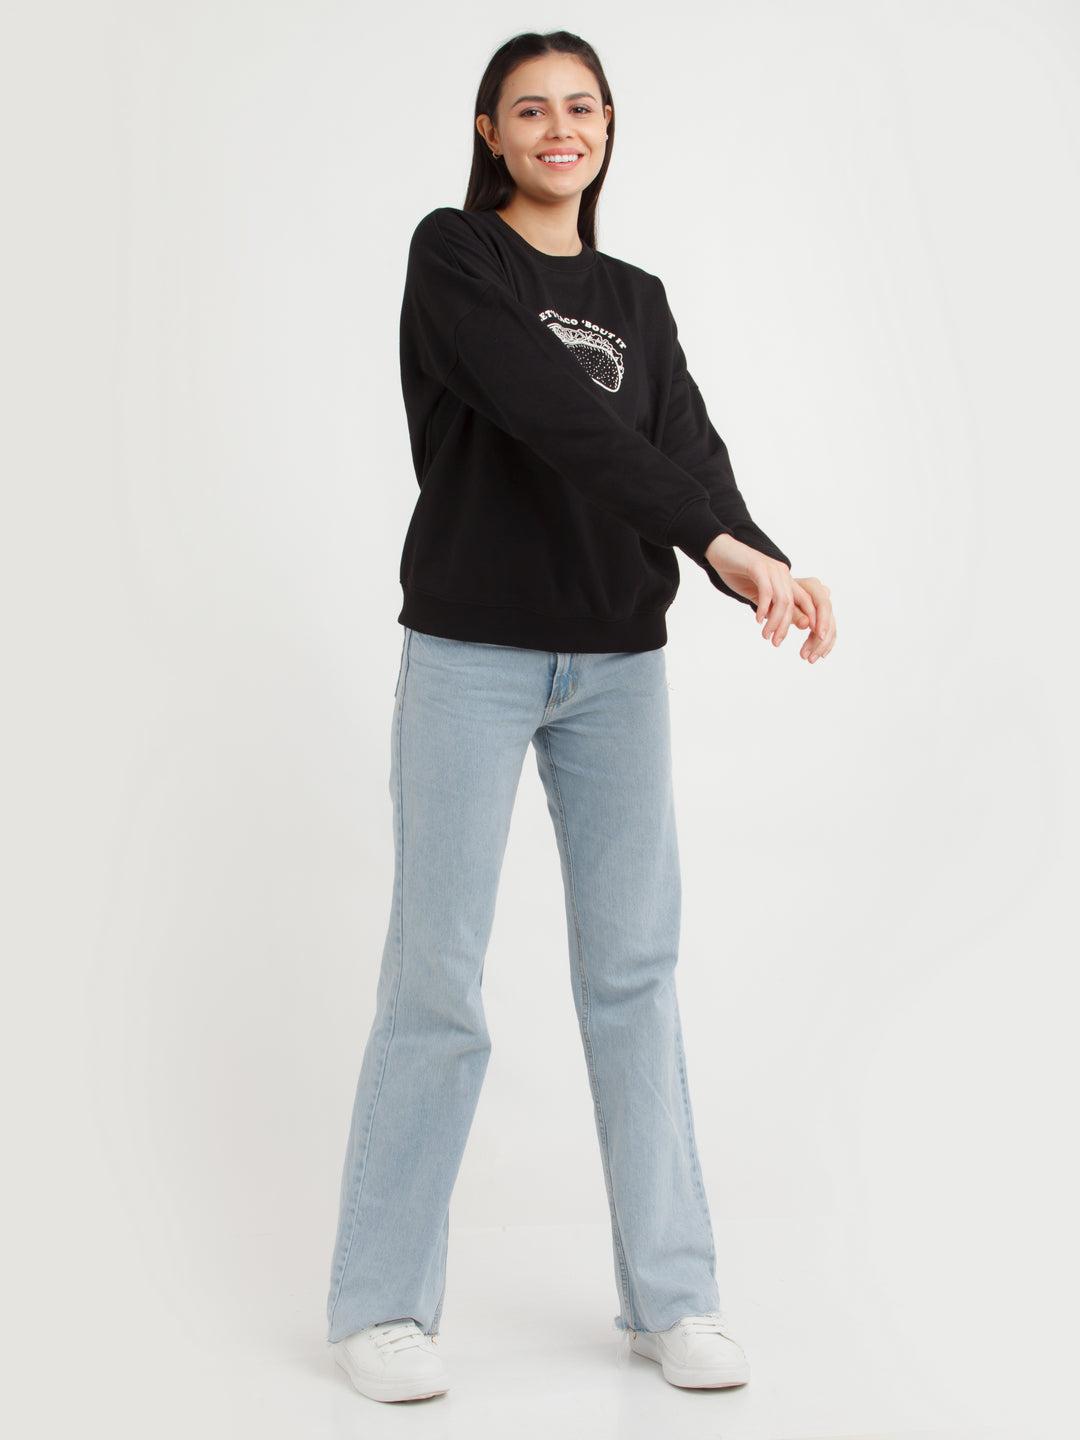 black printed sweatshirt for women